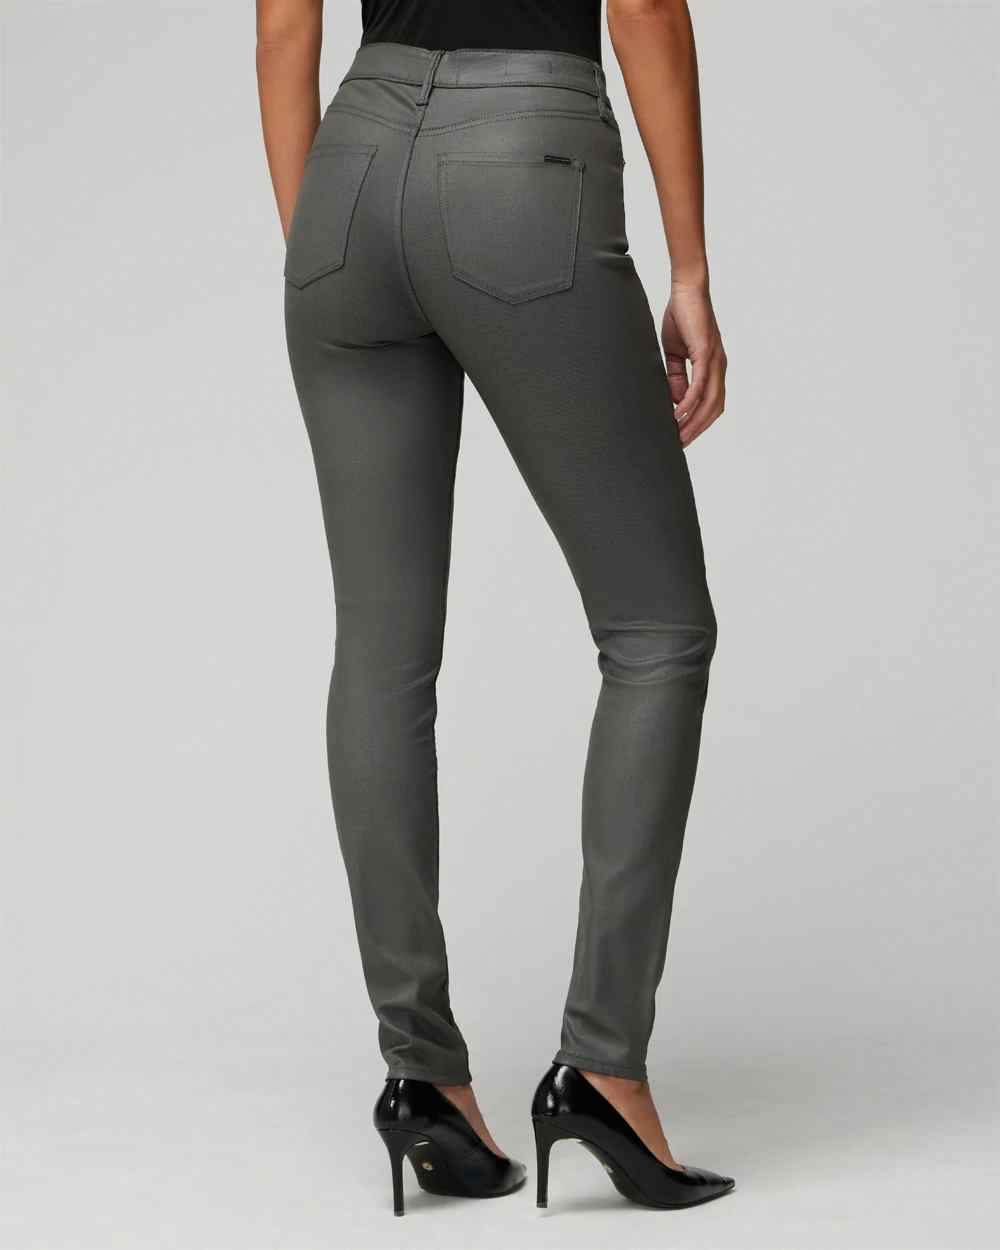 High-Rise Coated Skinny Jeans | White House Black Market